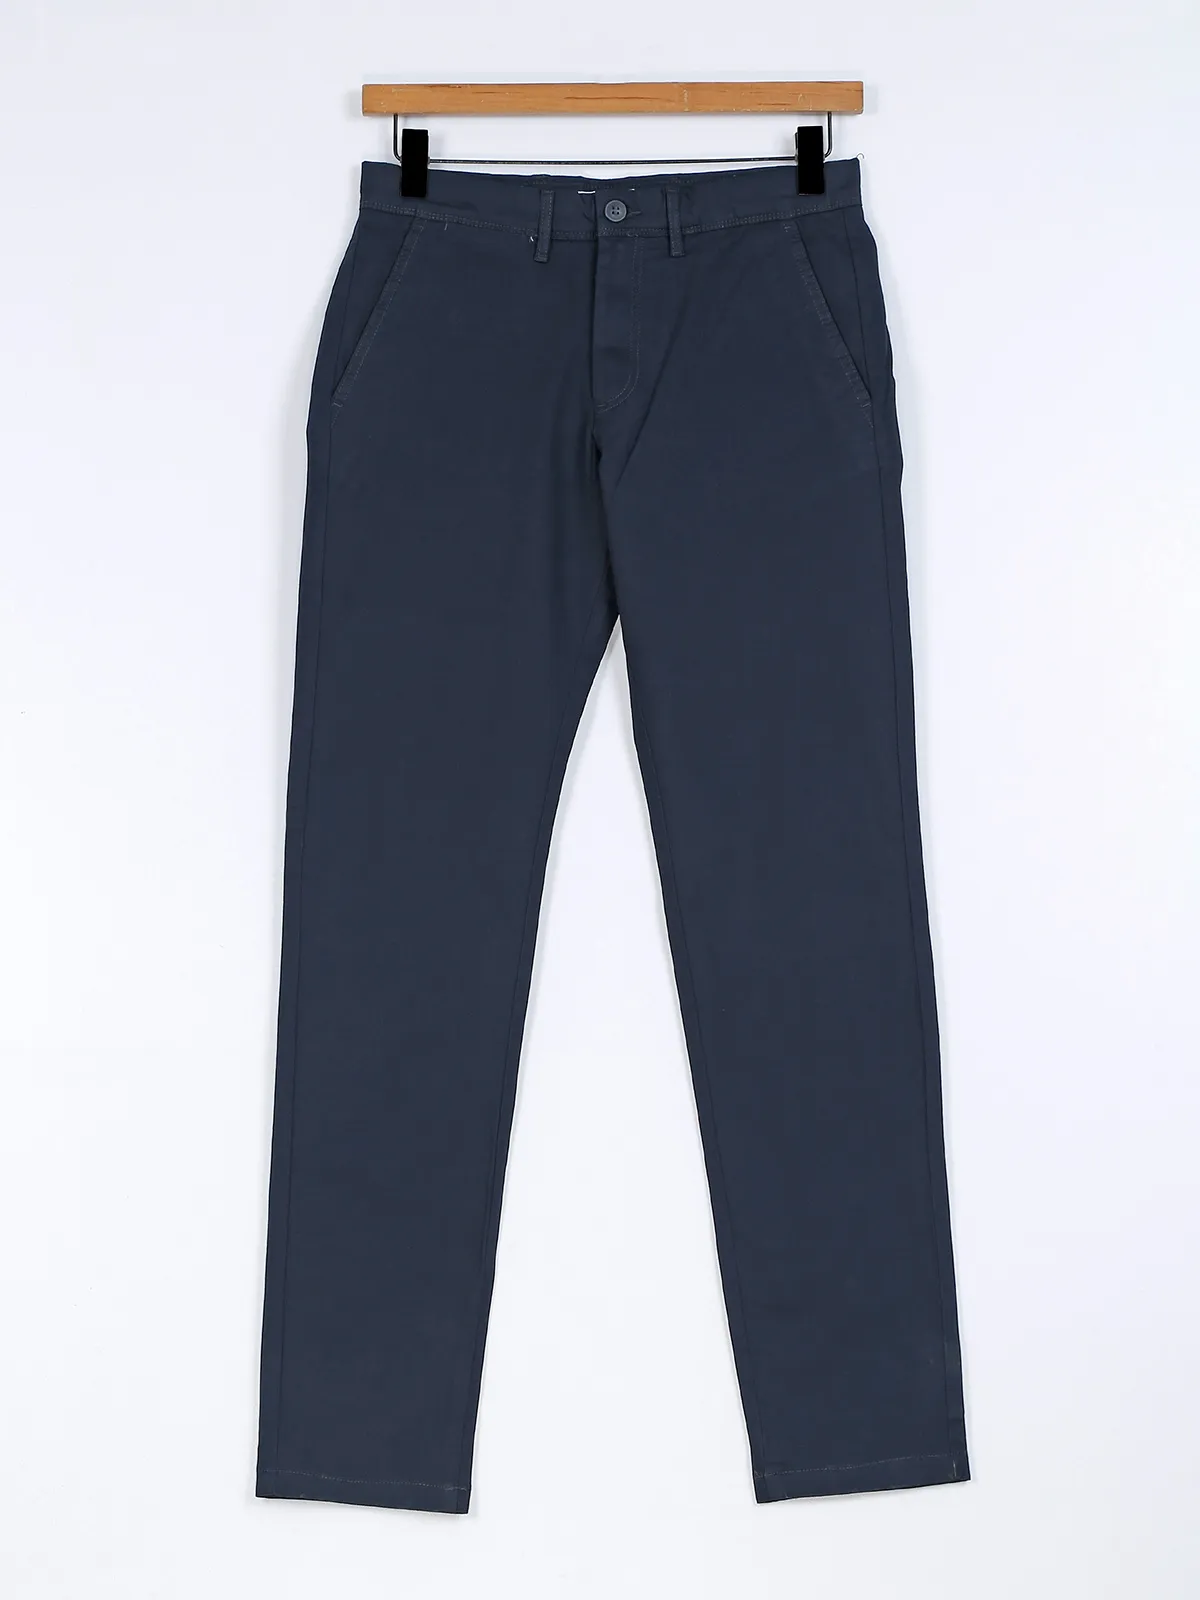 Celio navy solid formal wear cotton trouser